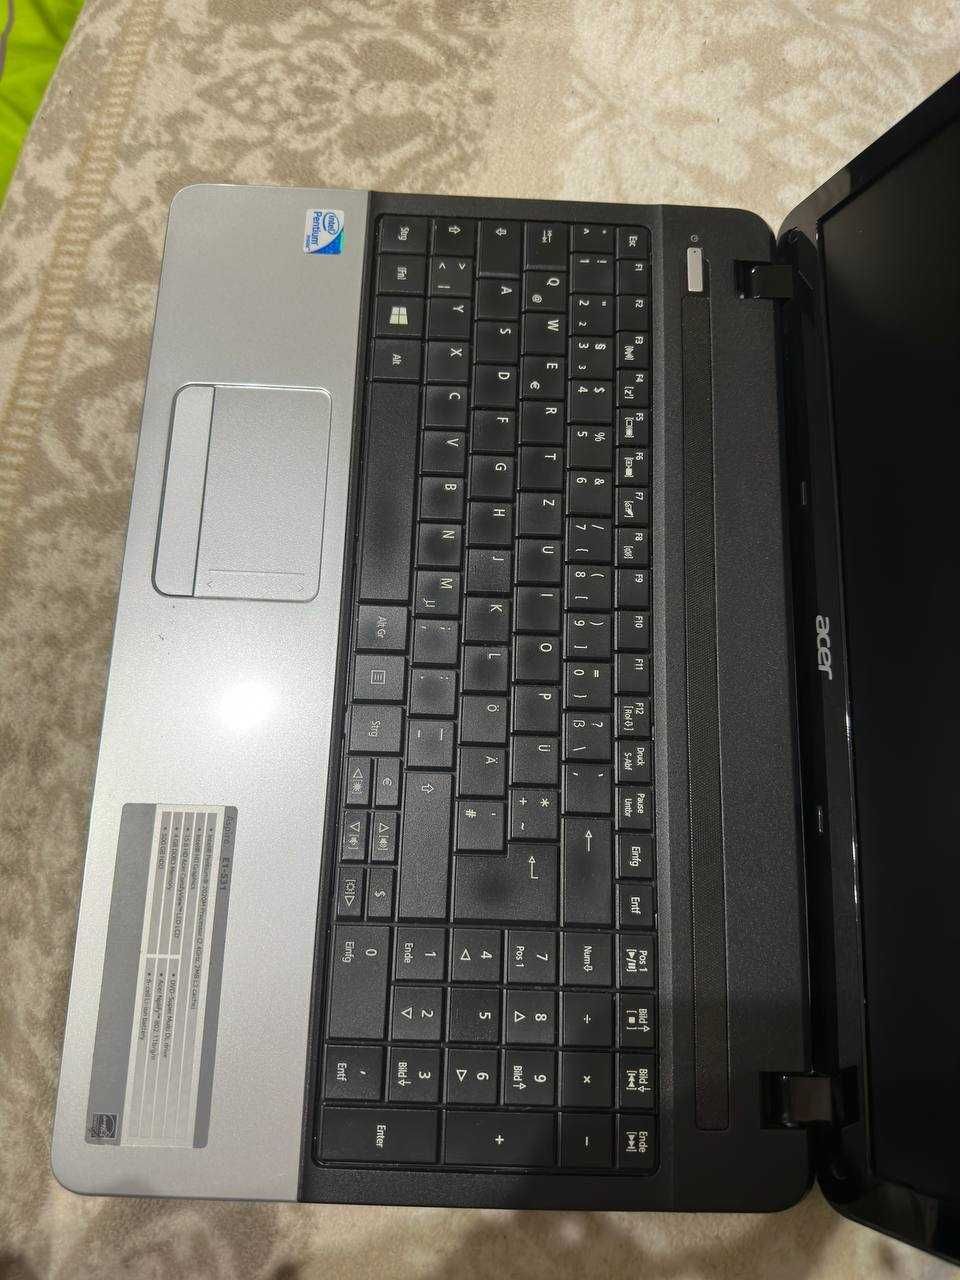 Ноутбук Acer 15.6" Pentium 2020M, 4GB RAM, HDD 320GB